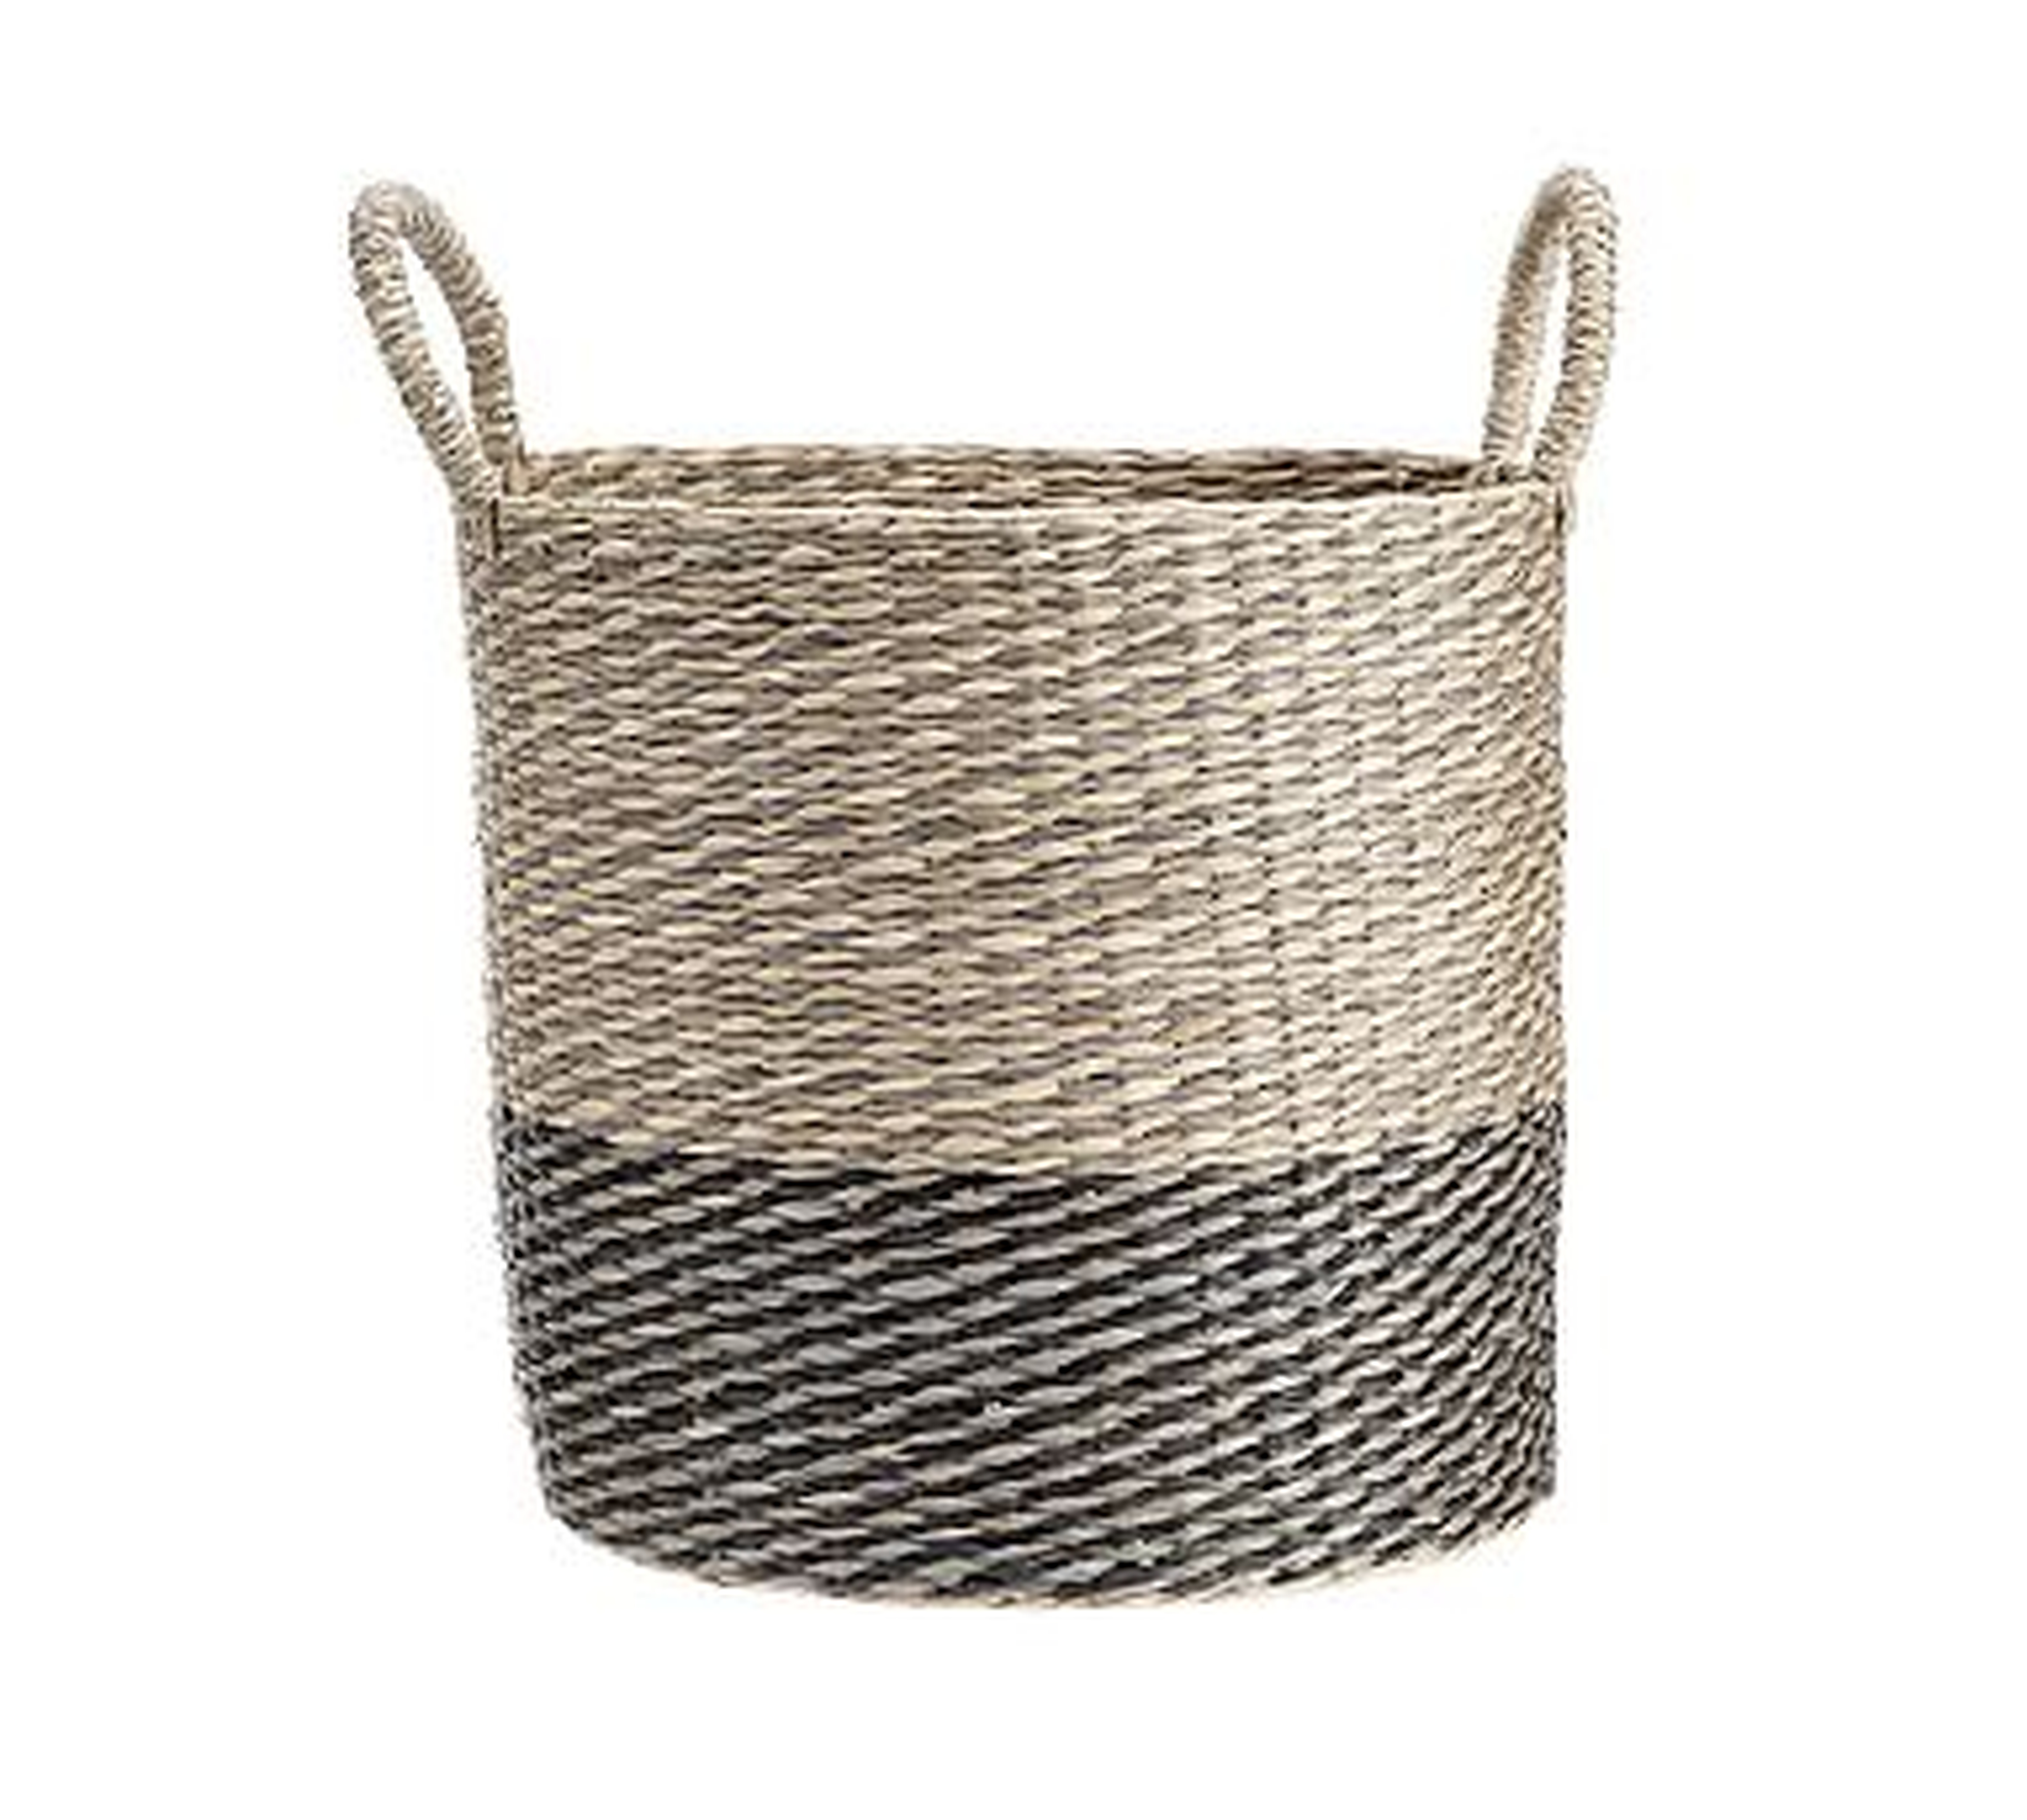 Lisbon Two-Tone Tote Basket, Natural/Black, Small - Pottery Barn